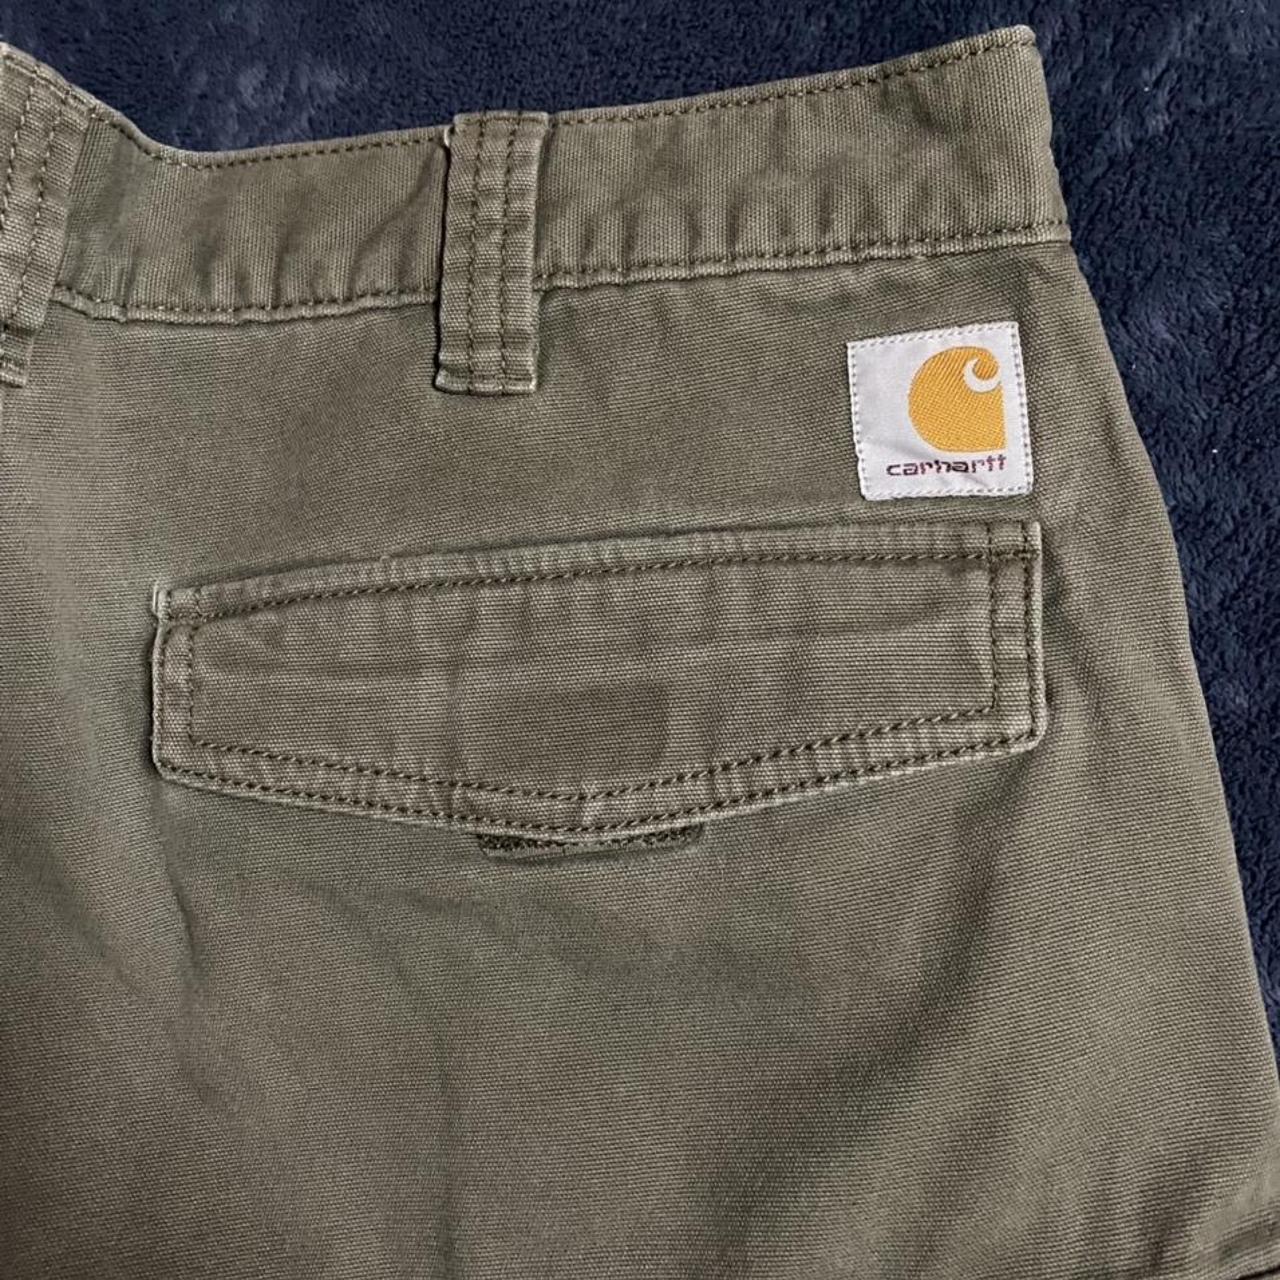 Carhartt Men's Khaki and Green Shorts | Depop